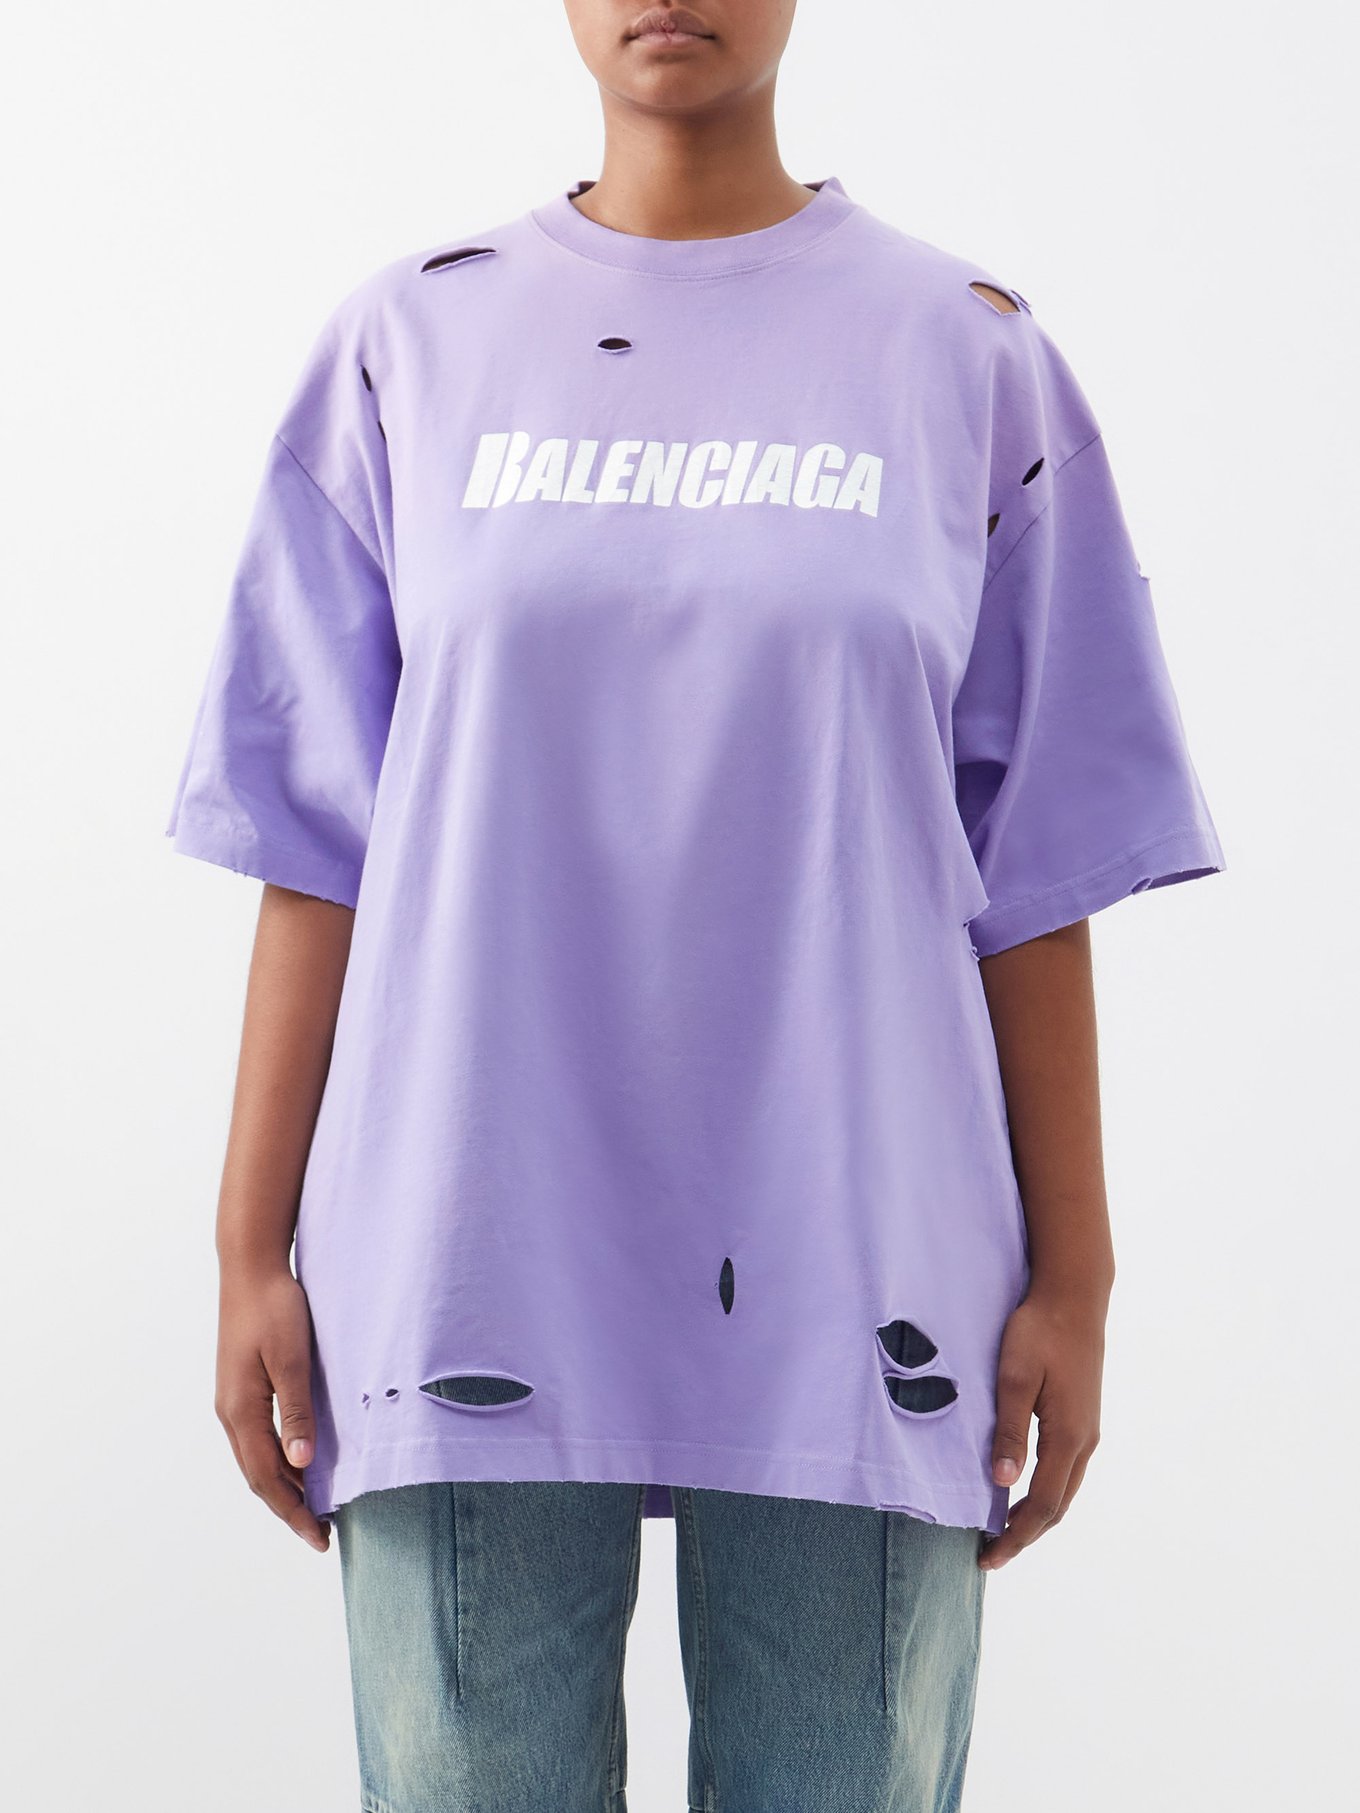 BALENCIAGA Distressed Logo-Print Cotton-Jersey T-Shirt for Men